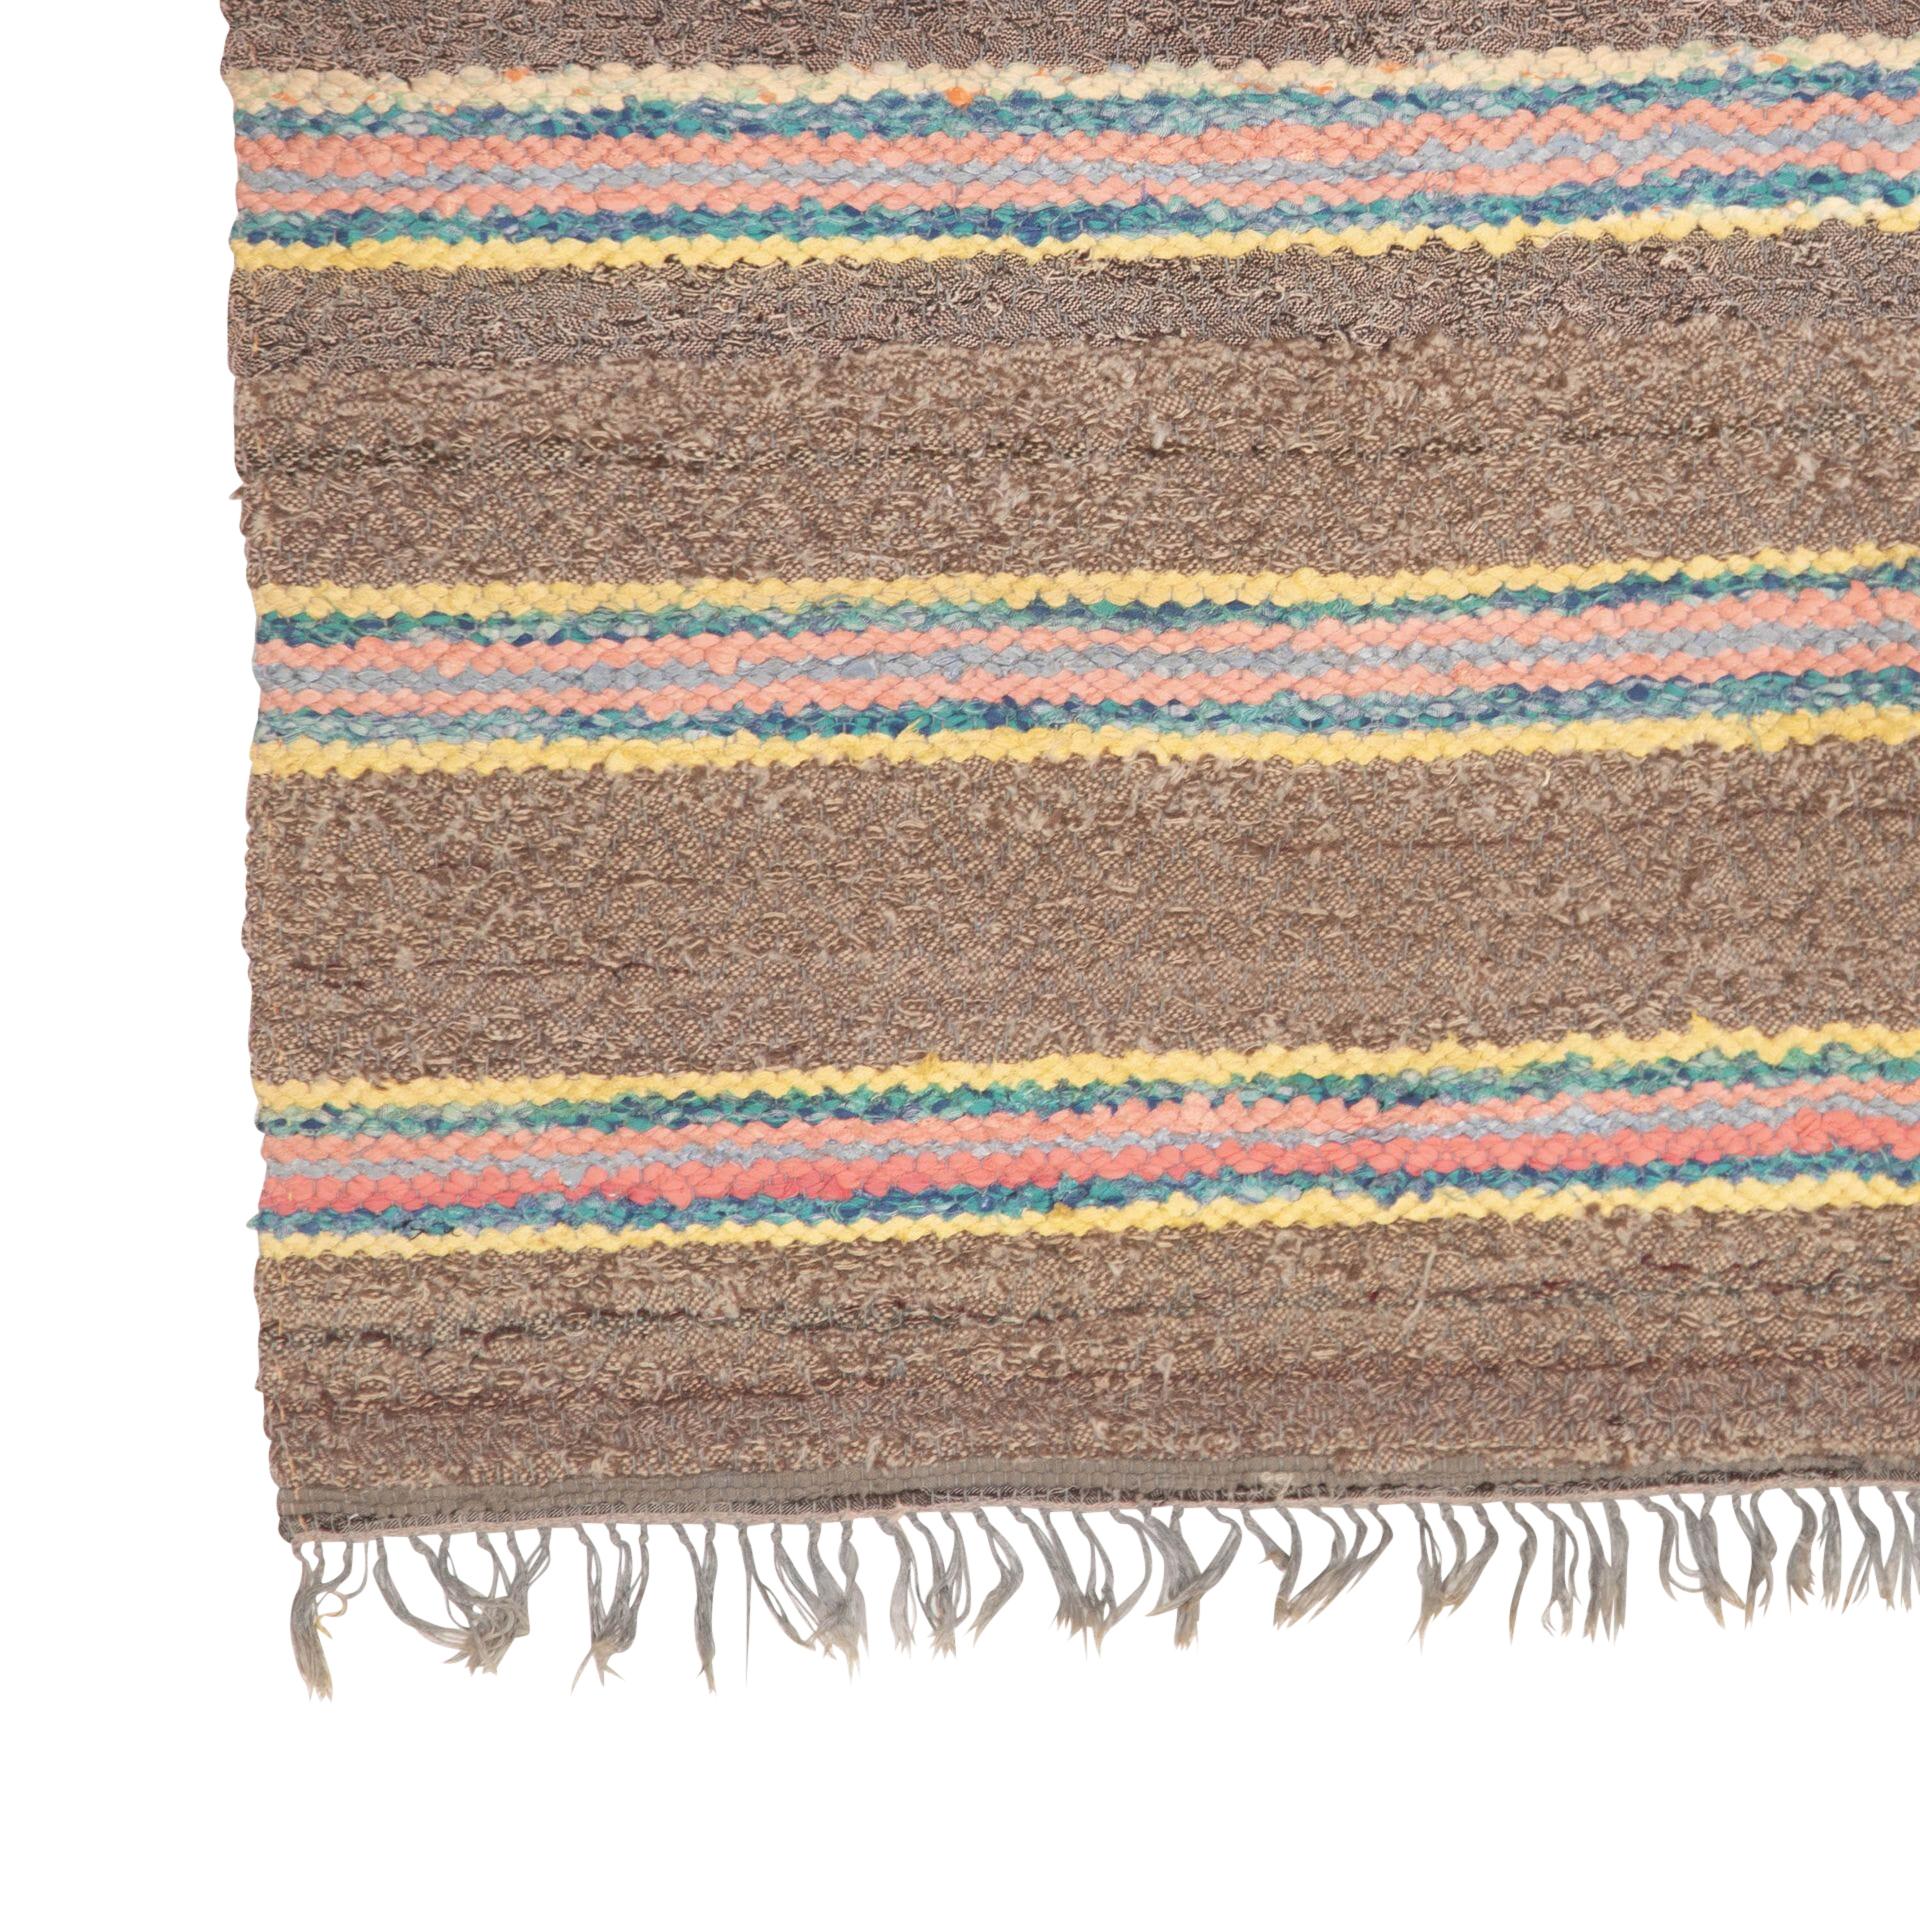 20th century traditional Swedish rug, browns, pinks, orange, blue, yellow.